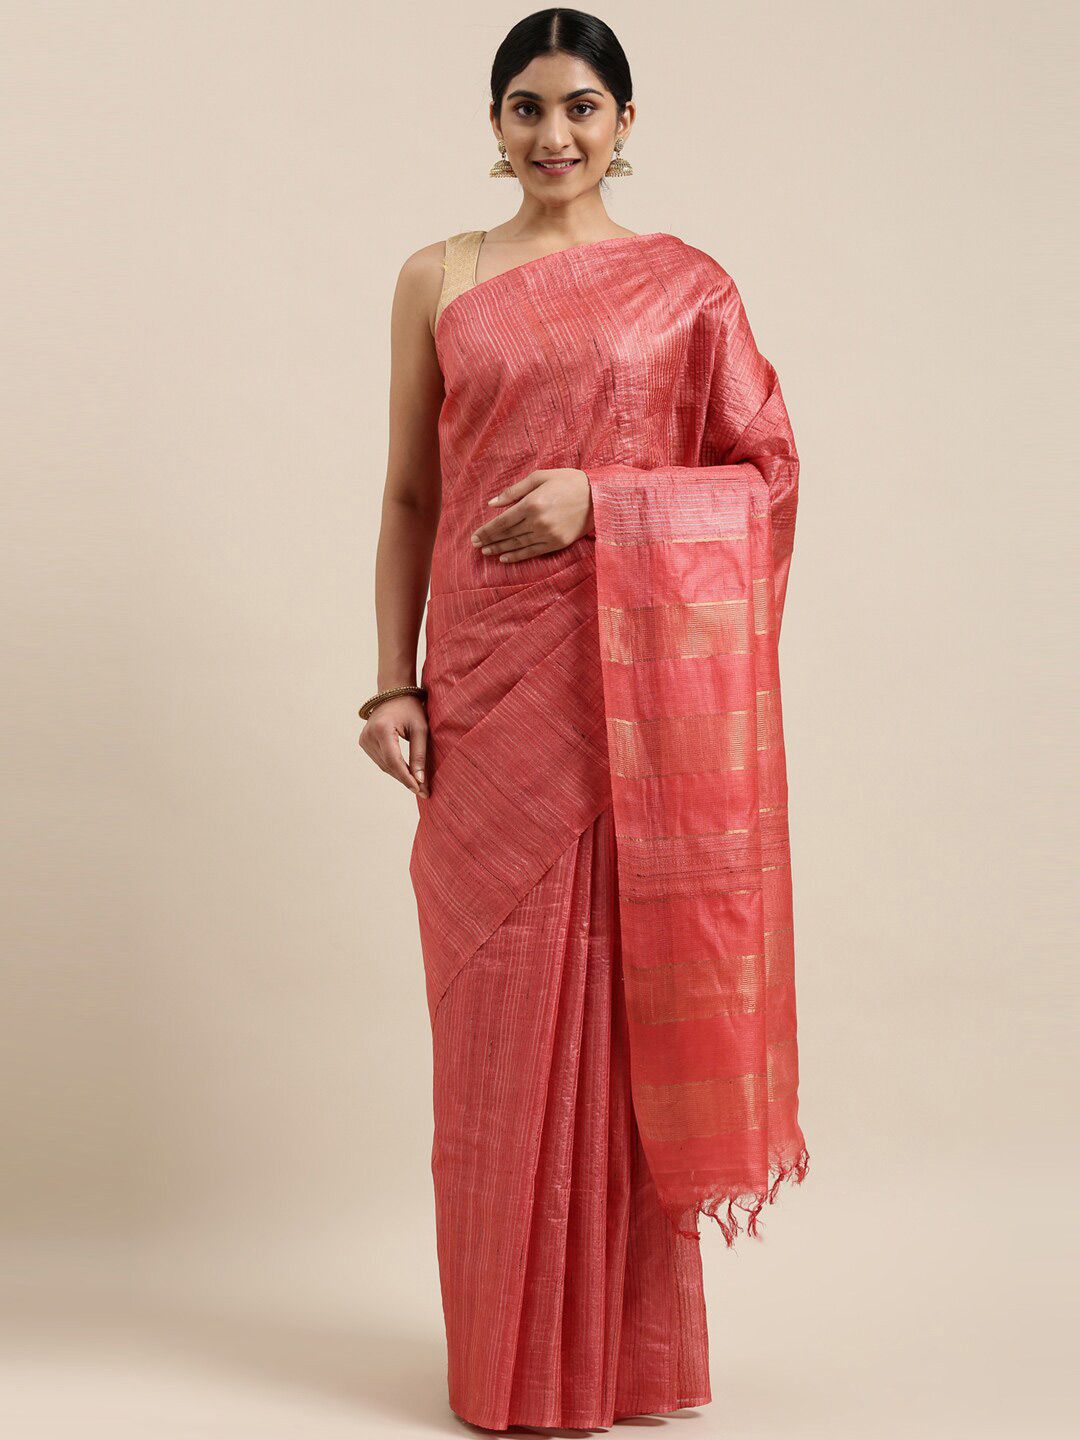 The Chennai Silks Red Striped Saree Price in India